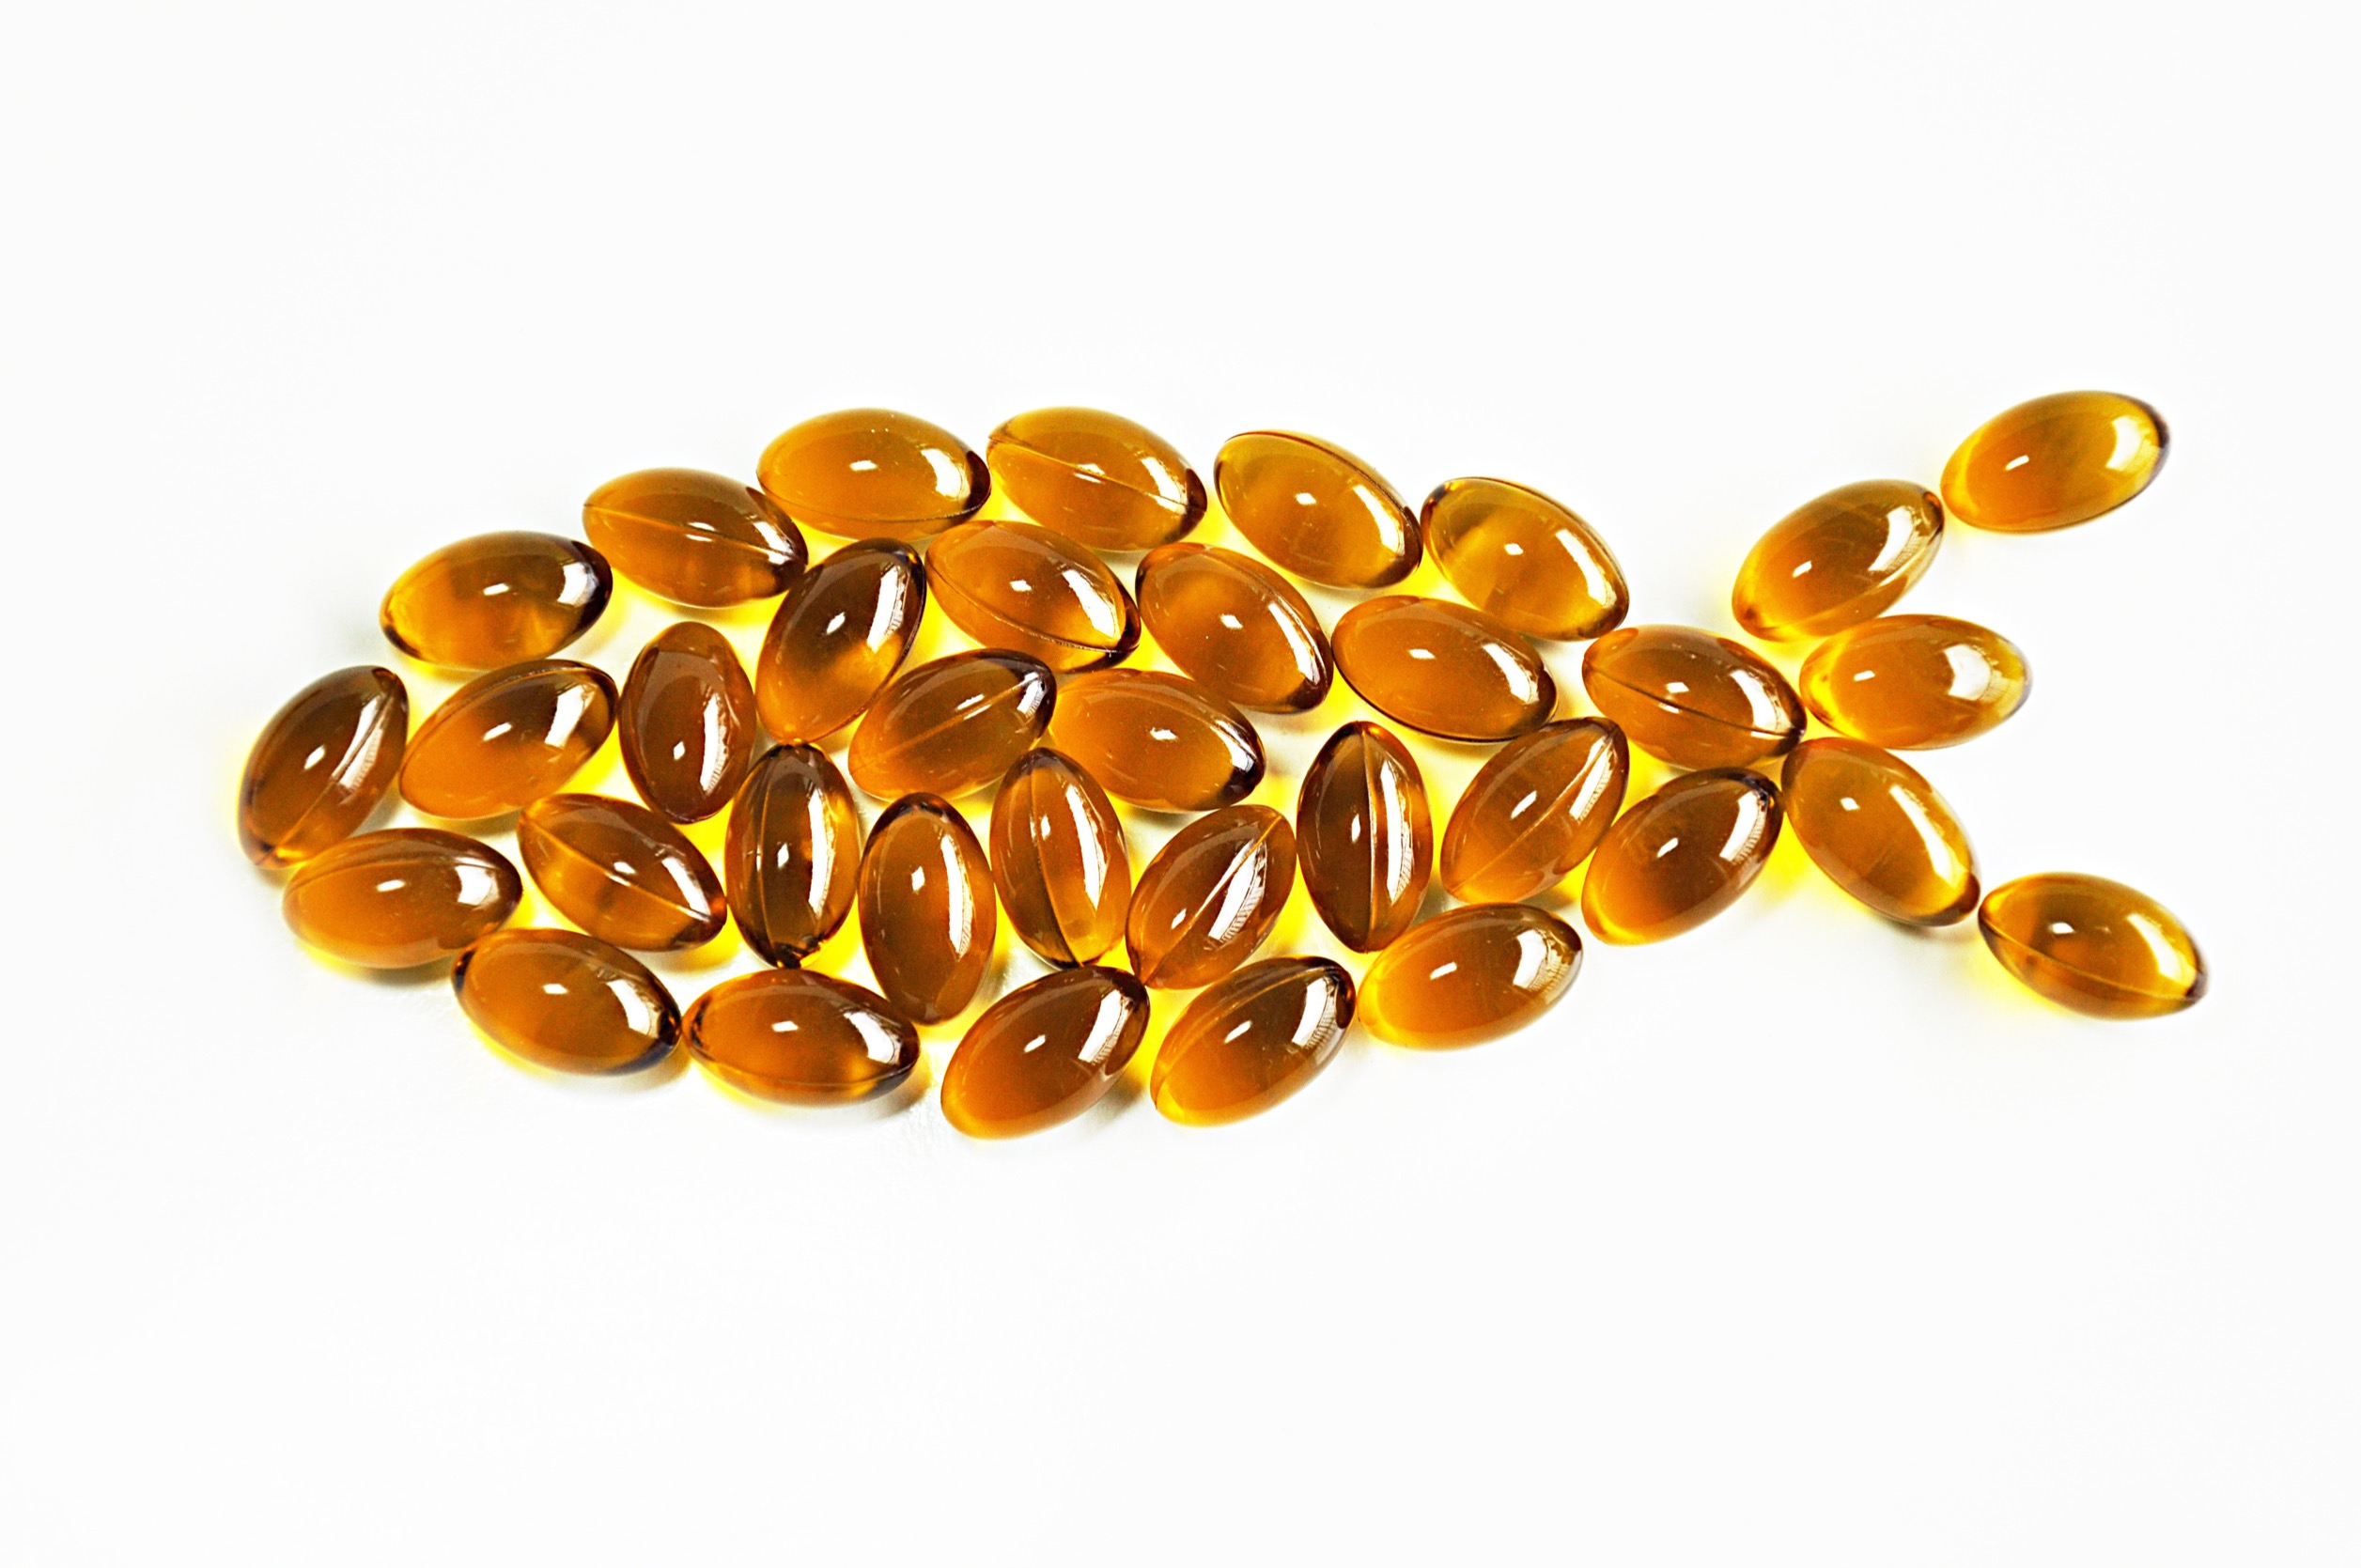 Omega 3 capsules in a fish shape